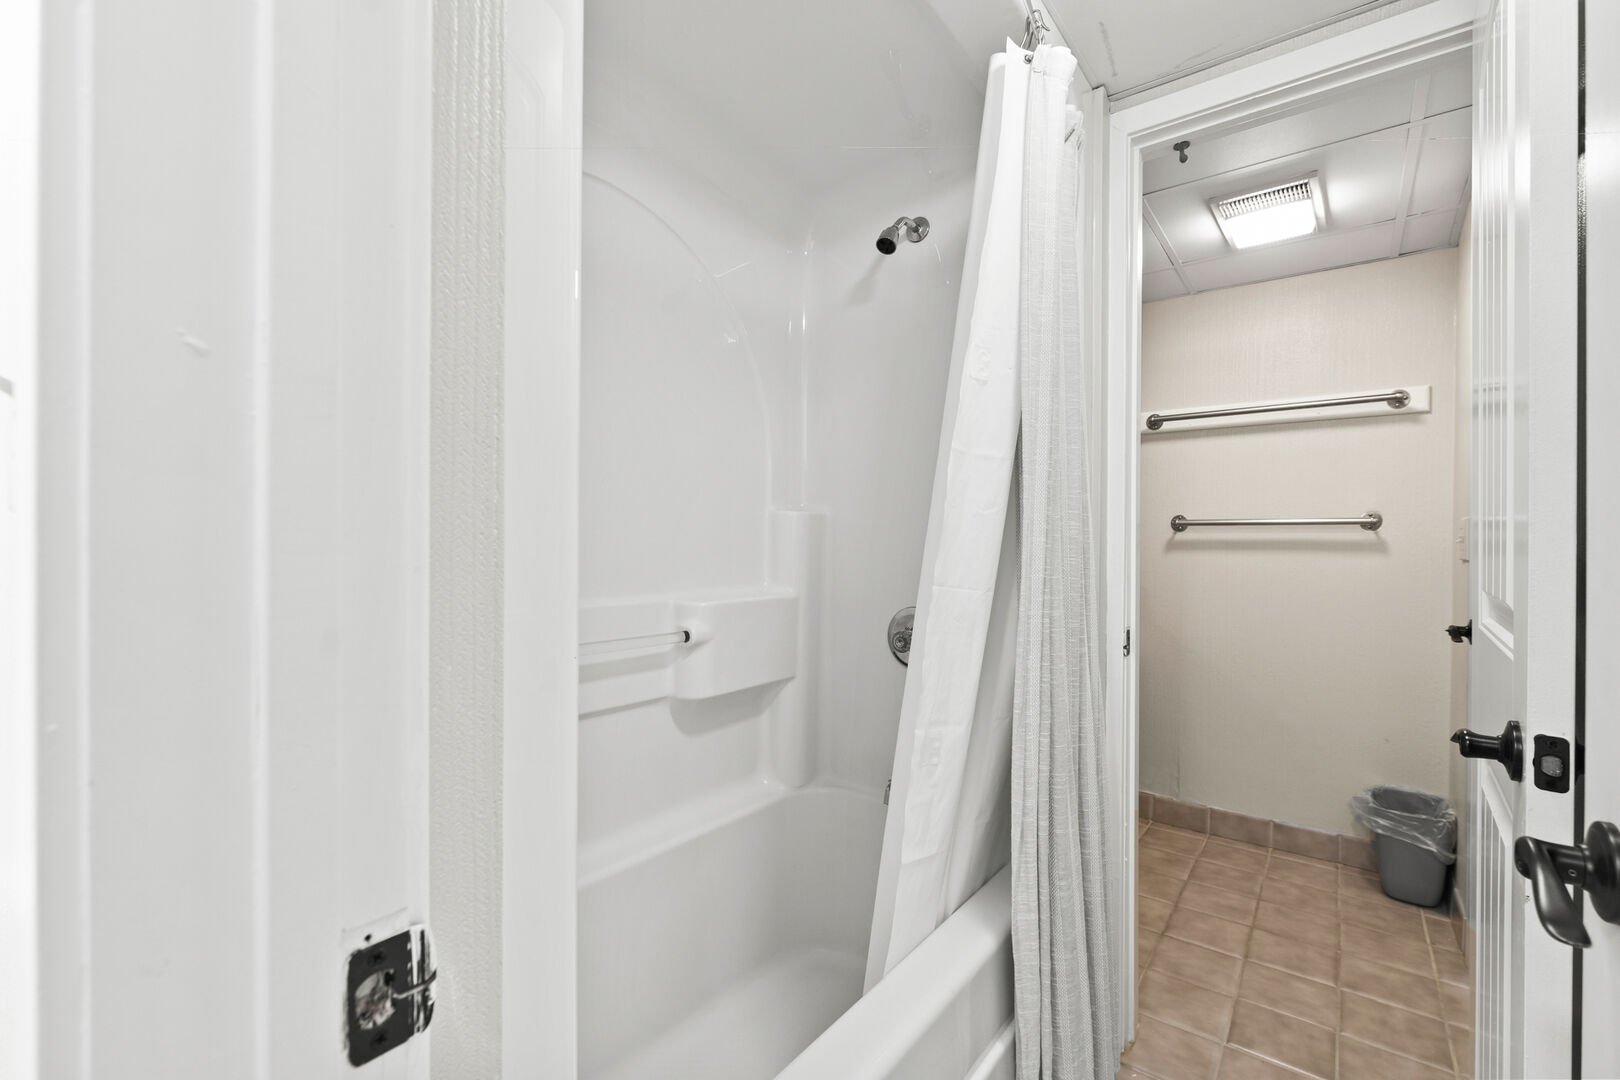 Combination Shower/Tub Between Each Sink/Toilet